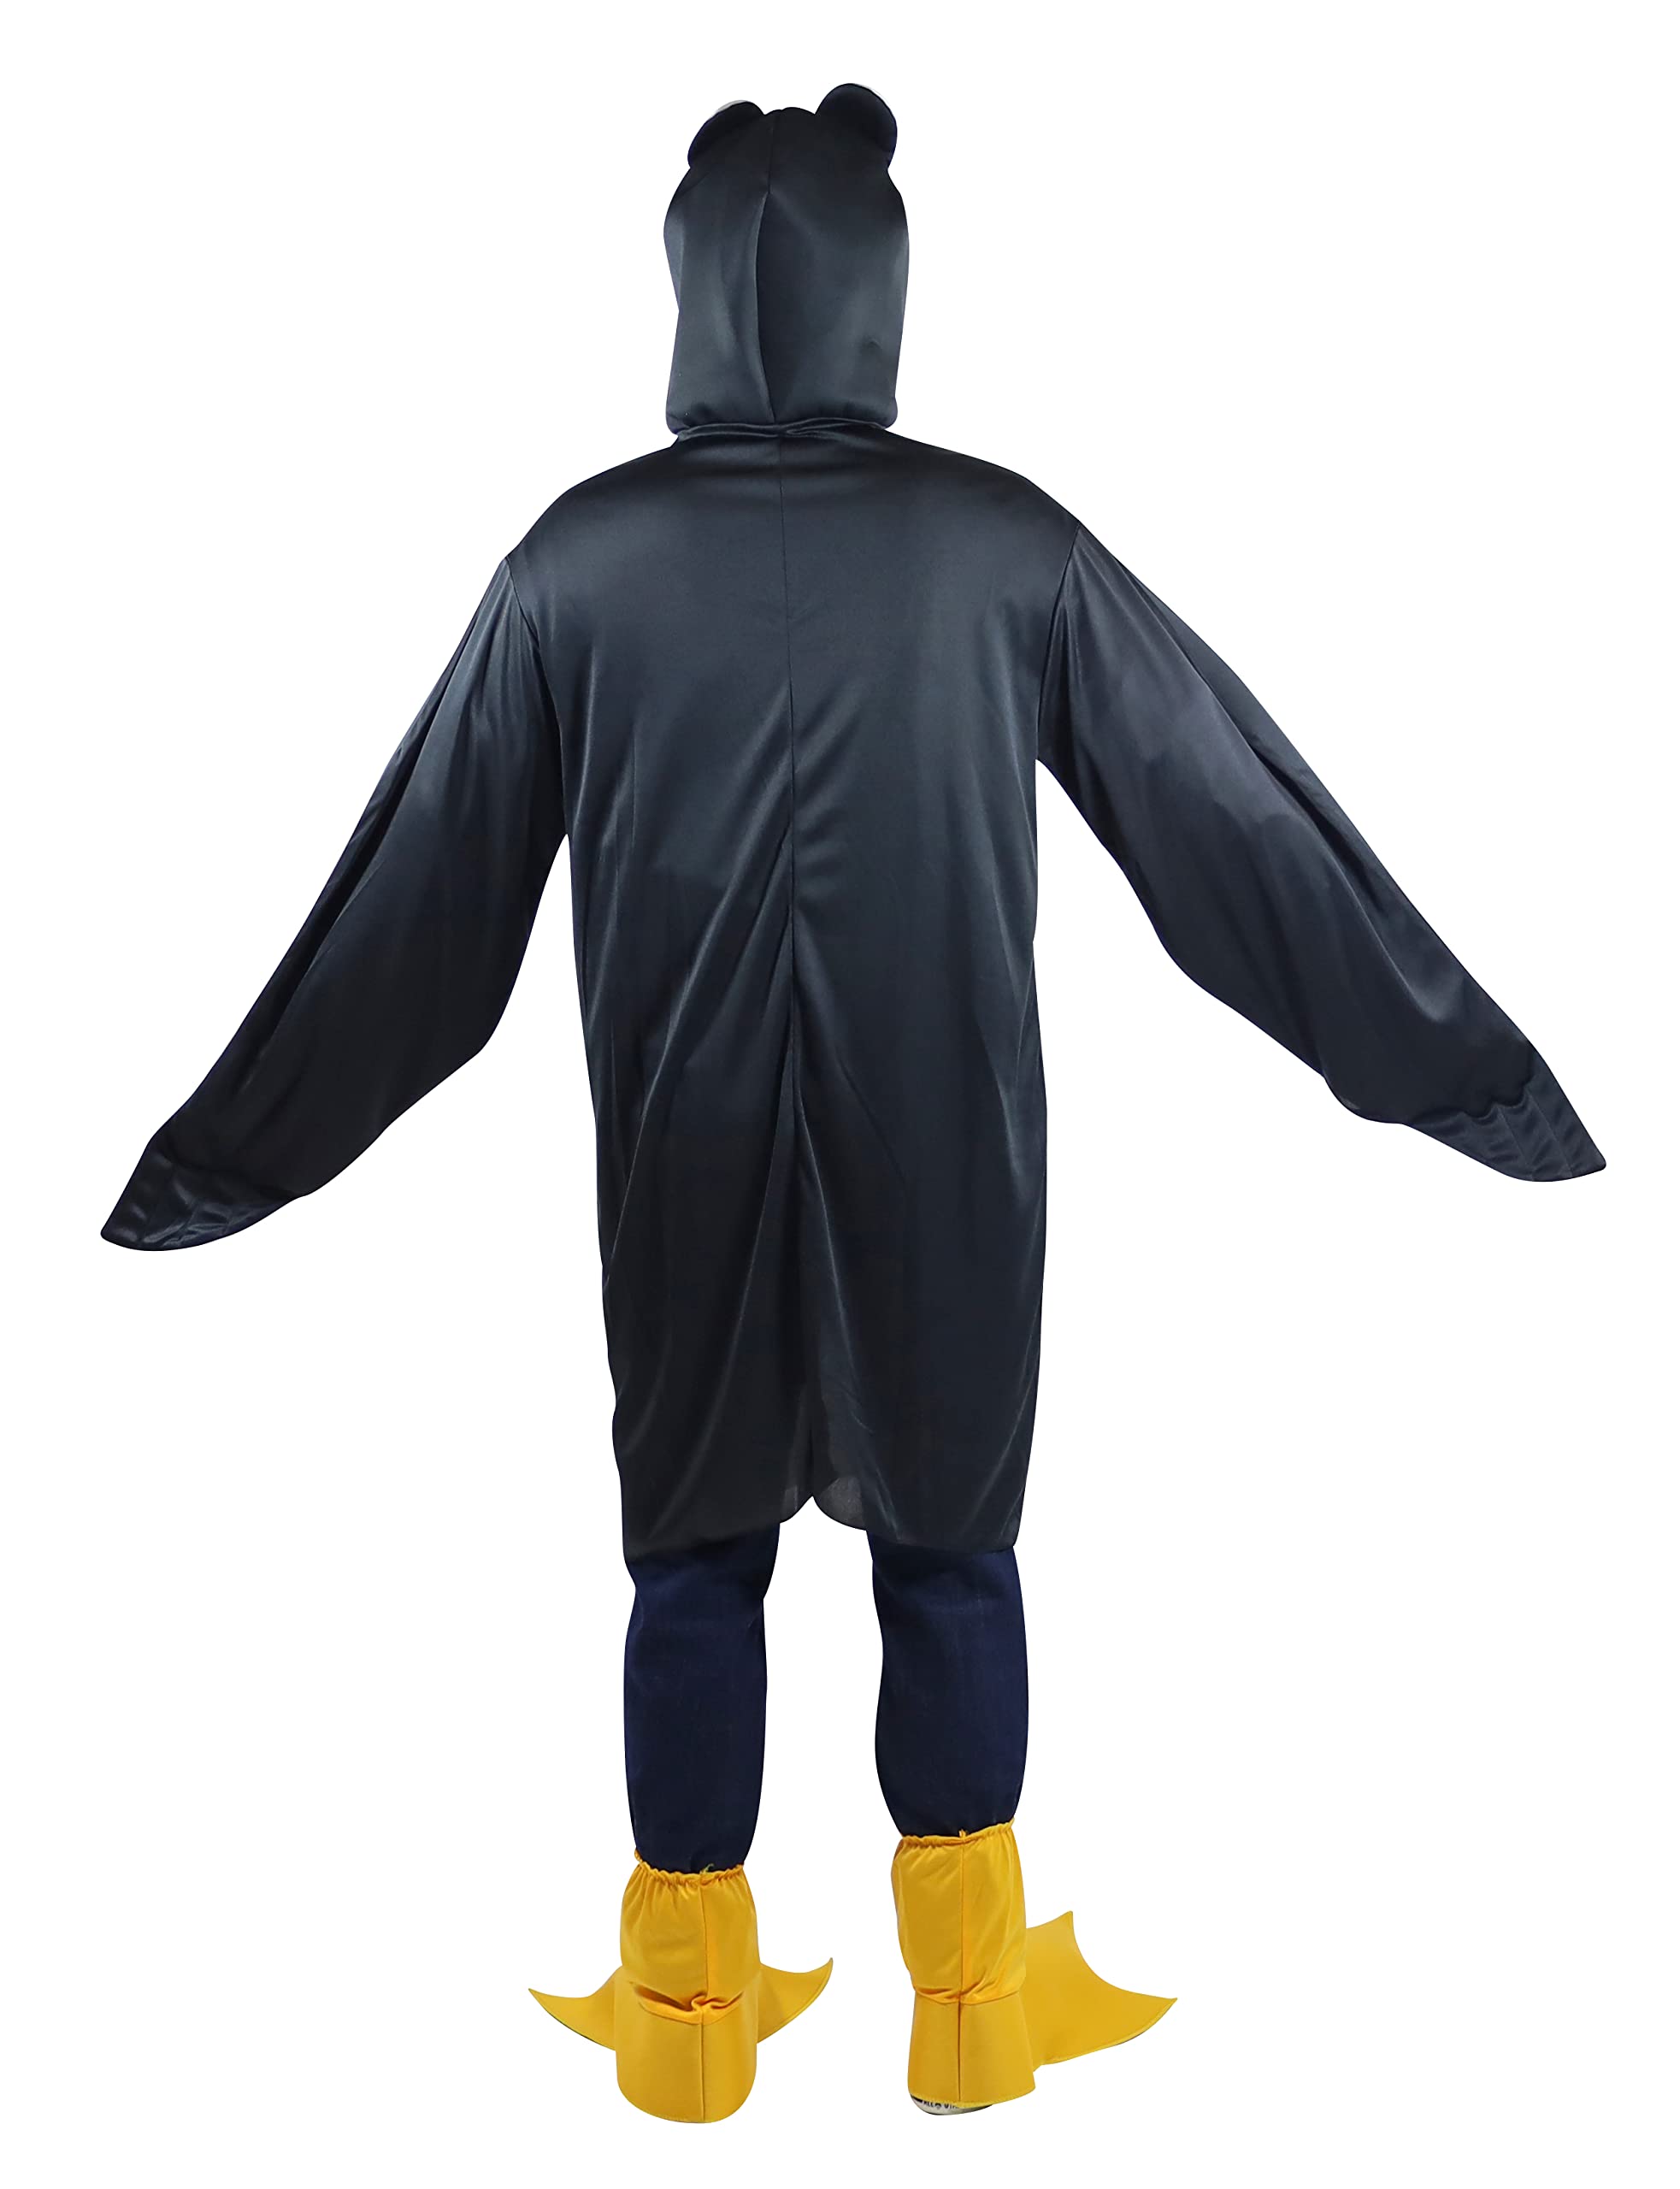 Rasta Men's Imposta Lightweight Penguin Costume, Black